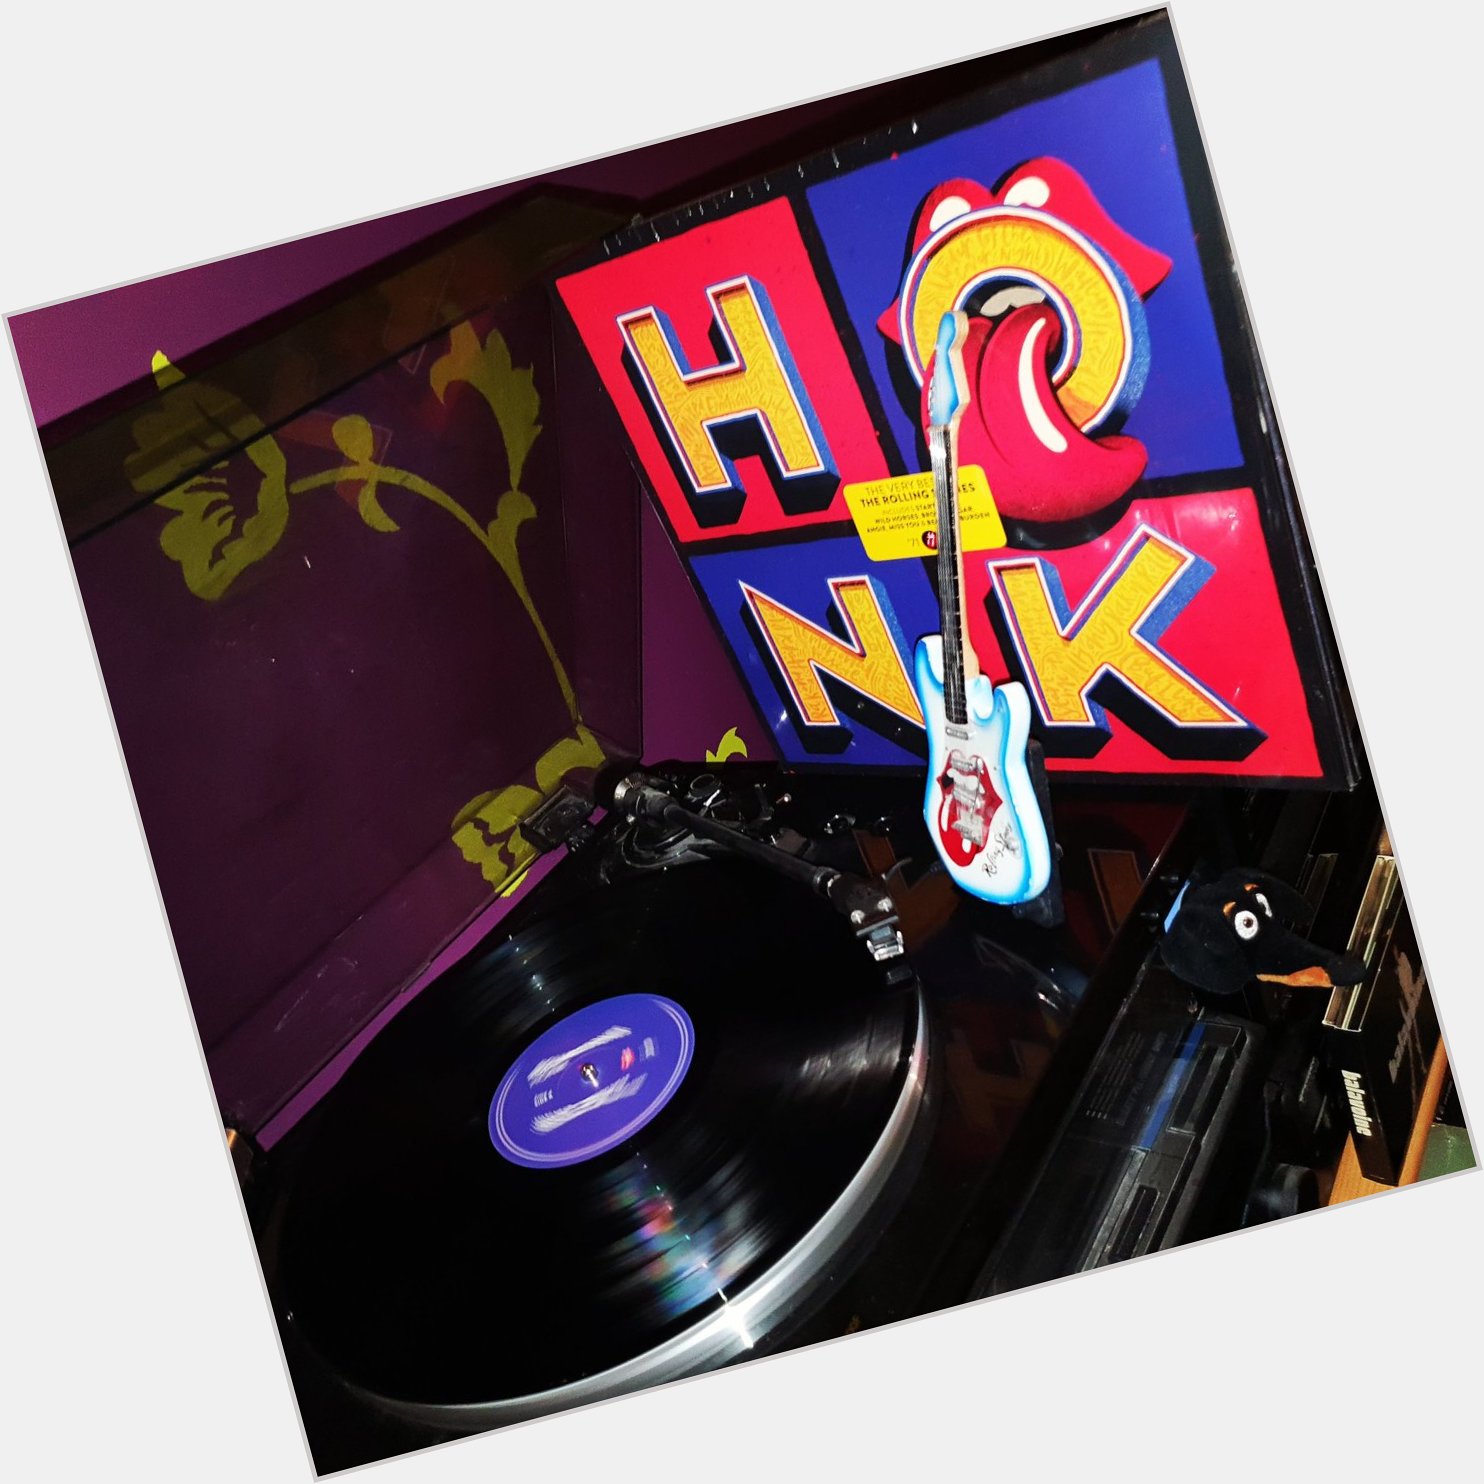 Happy Birthday Brian Jones (28.2.)! RIP
The Rolling Stones - Honk (Polydor/2019) 3-LP  